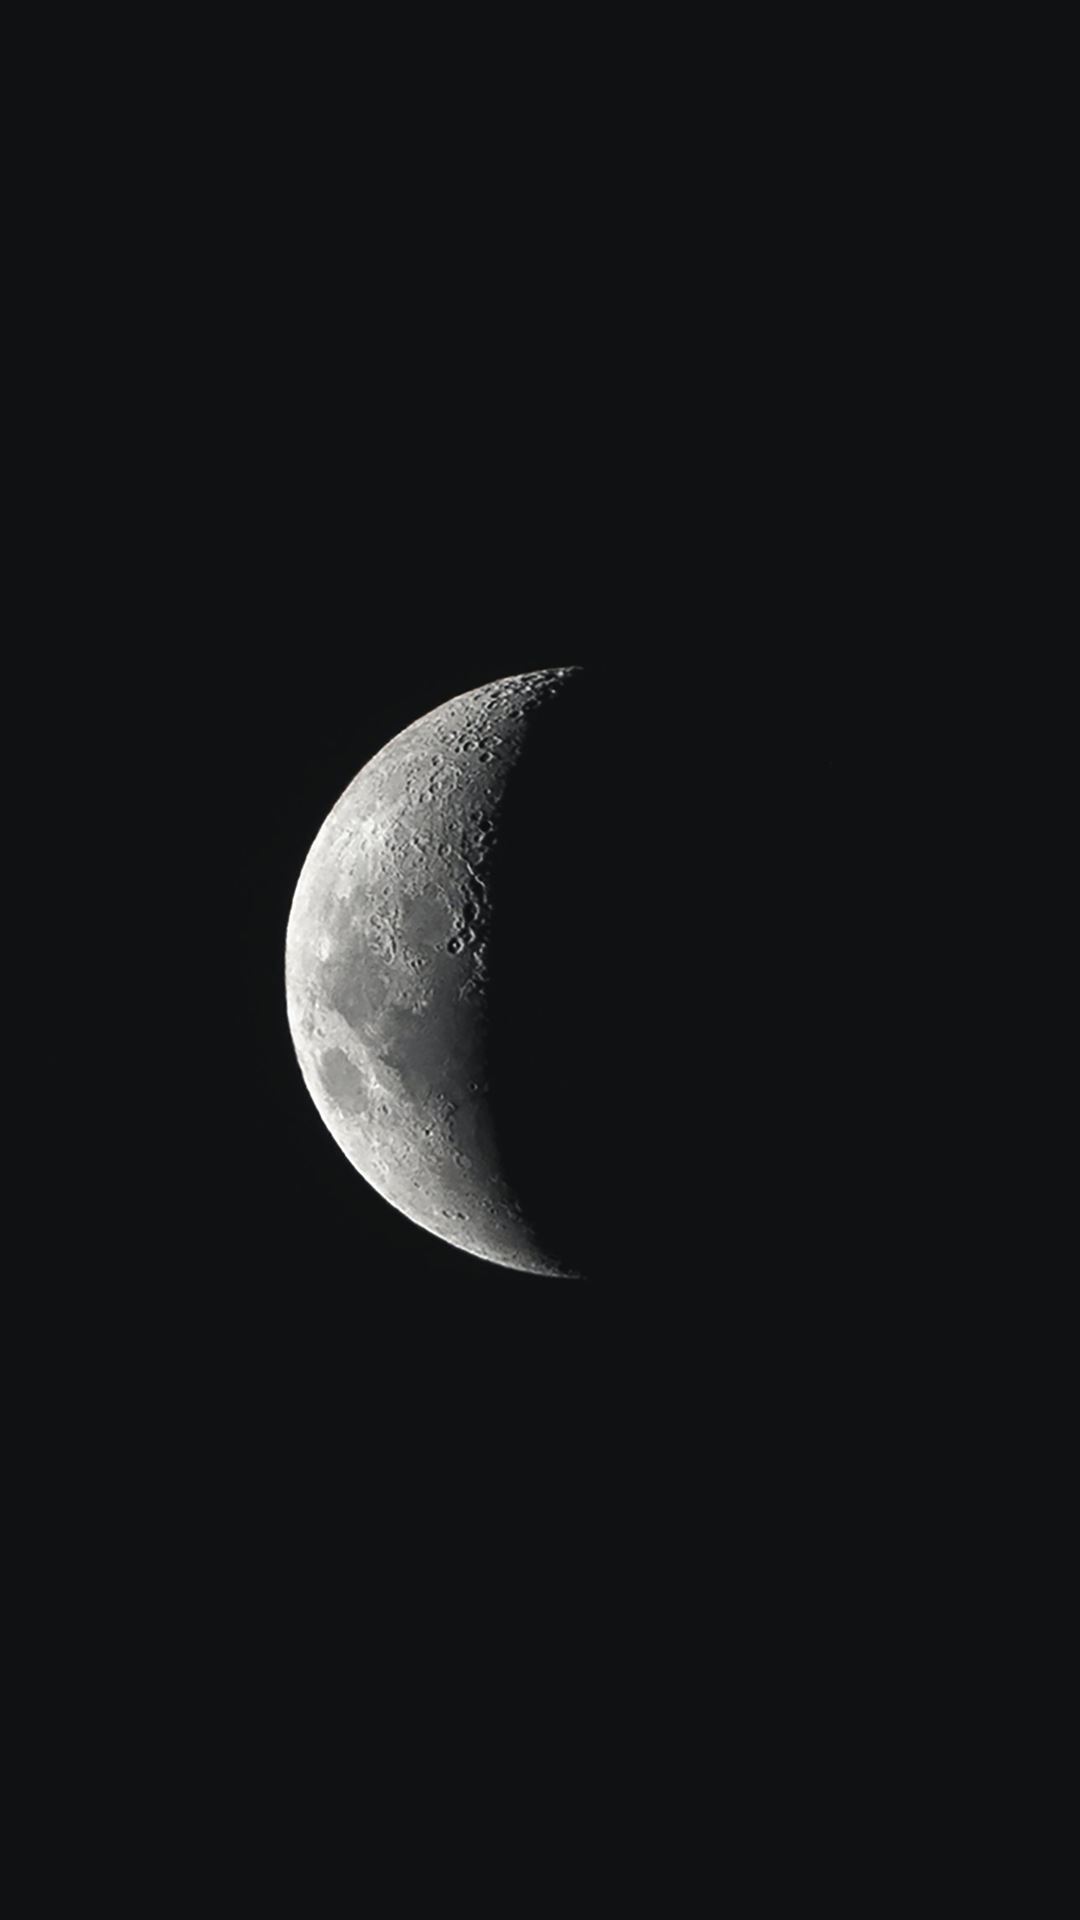 Full Moon on Black Background  Free Stock Photo